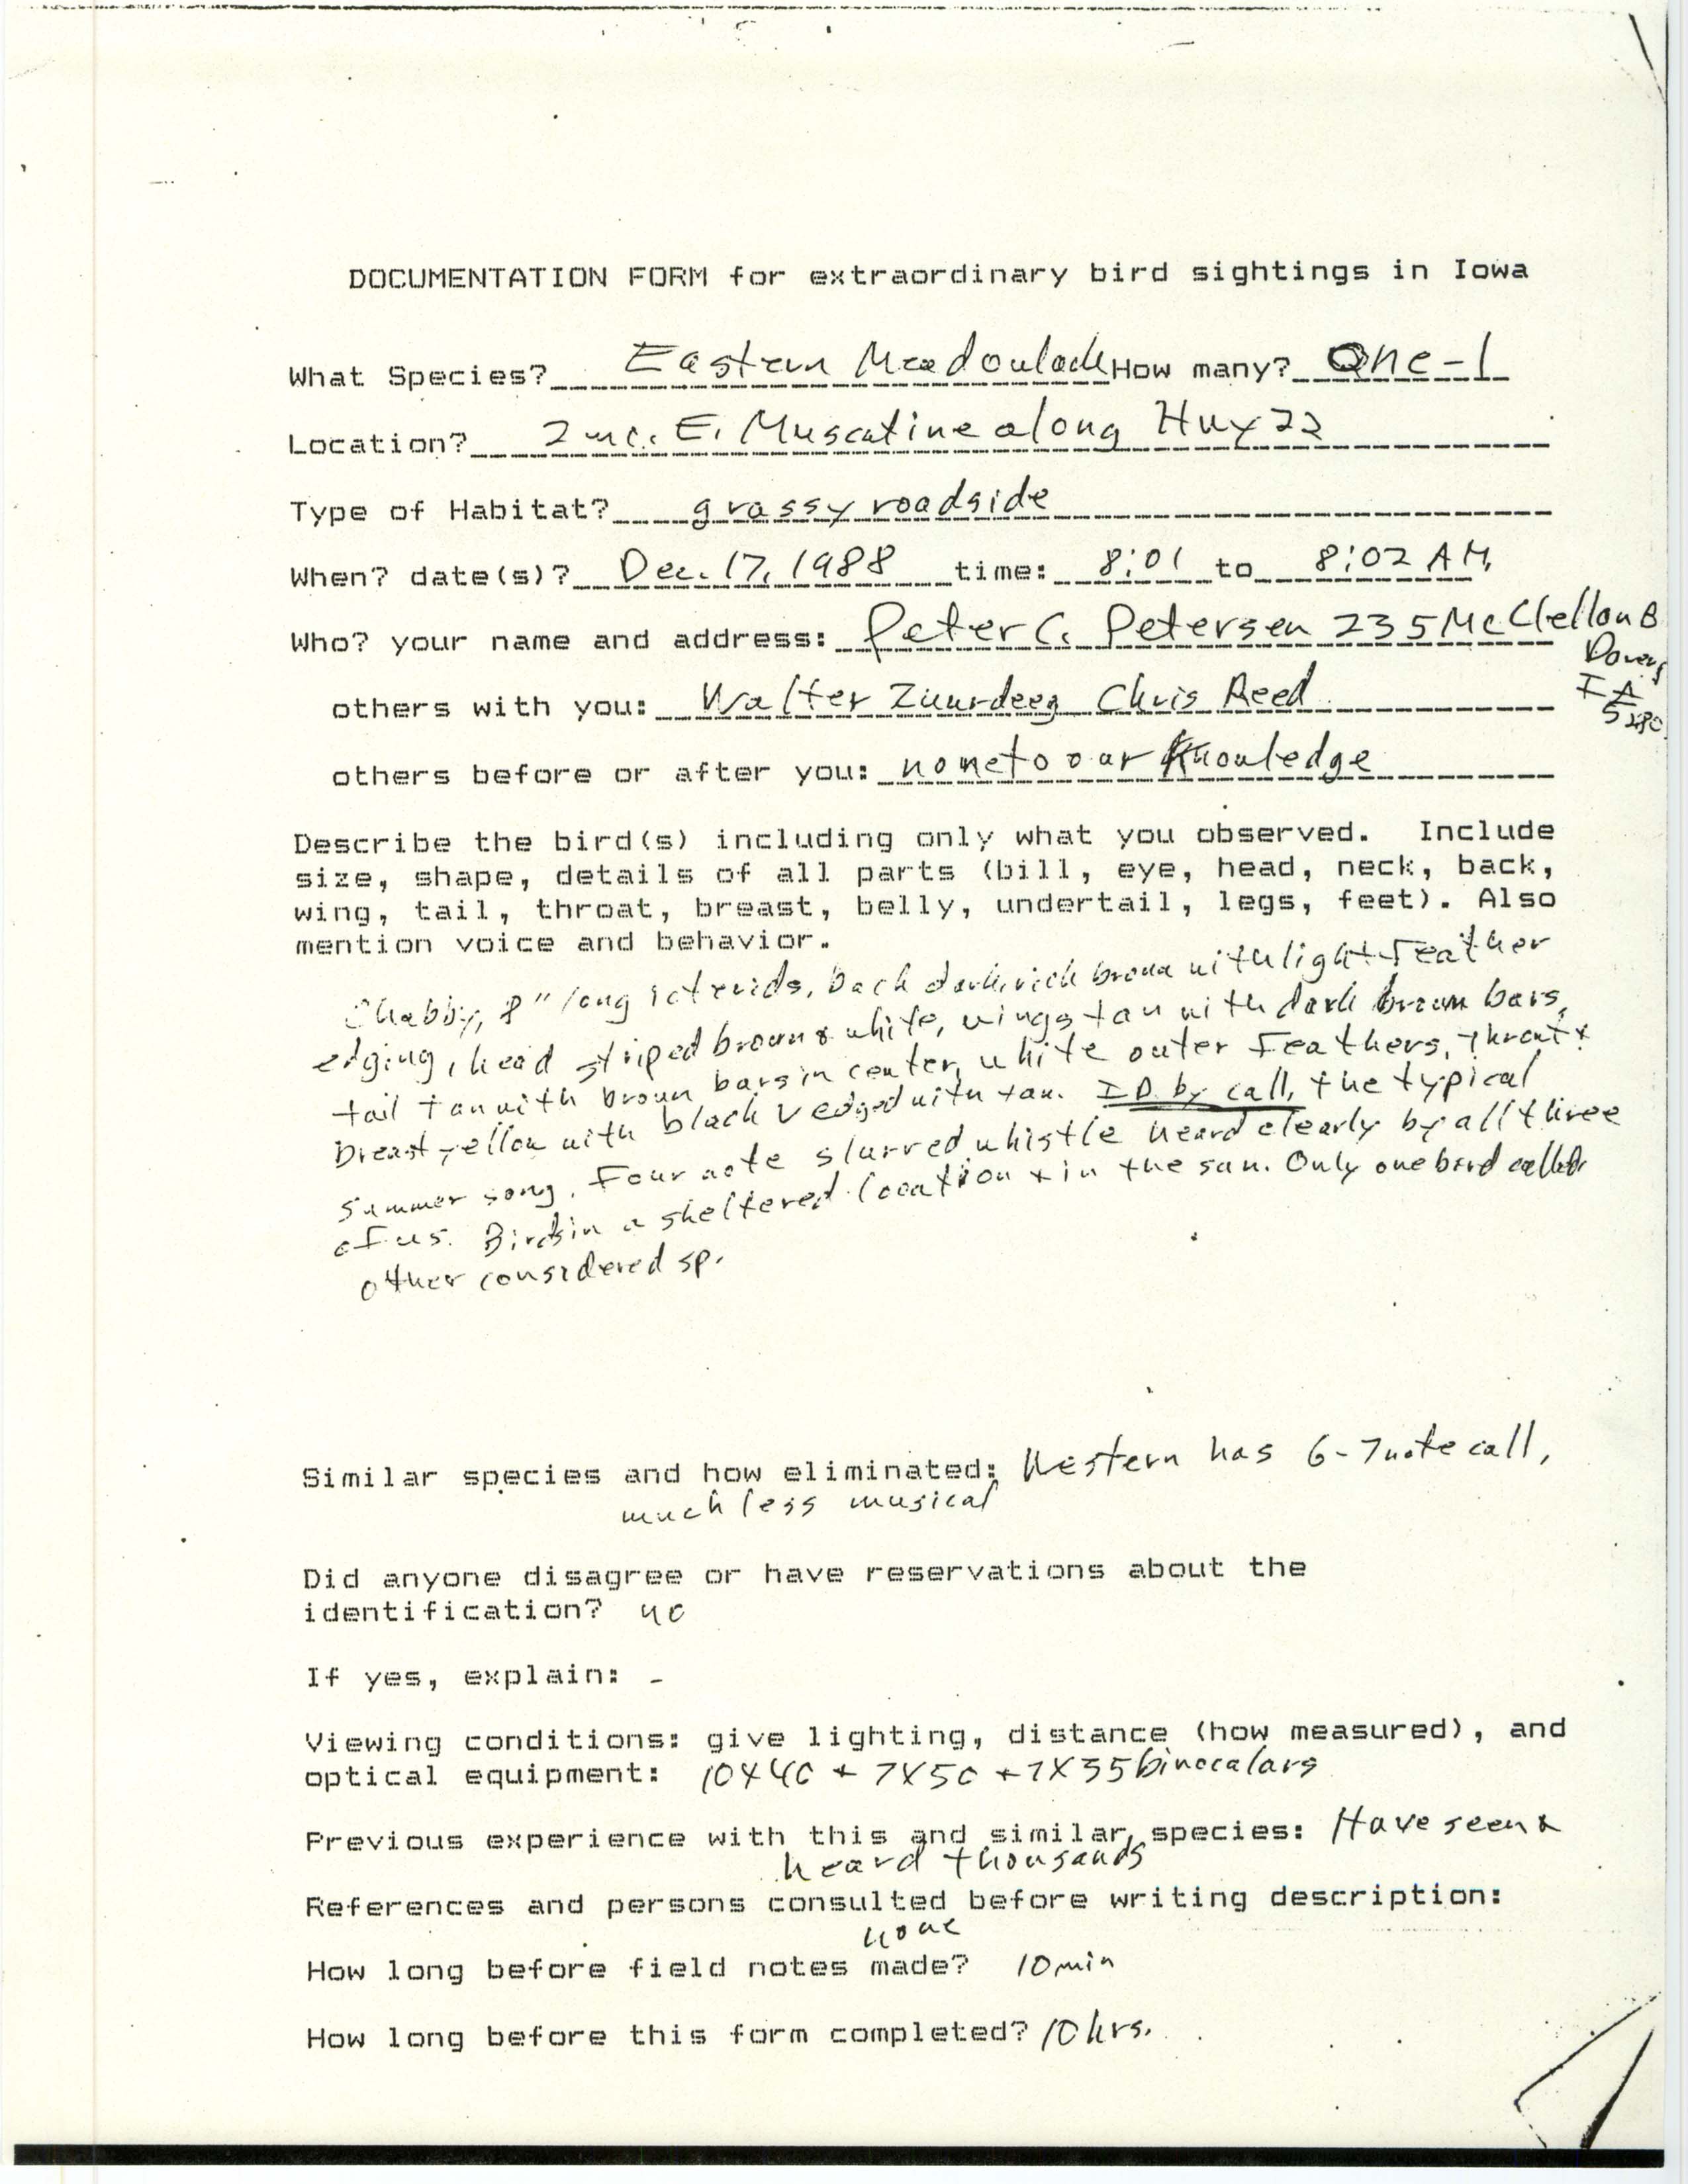 Rare bird documentation form for Eastern Meadowlark east of Muscatine, 1988